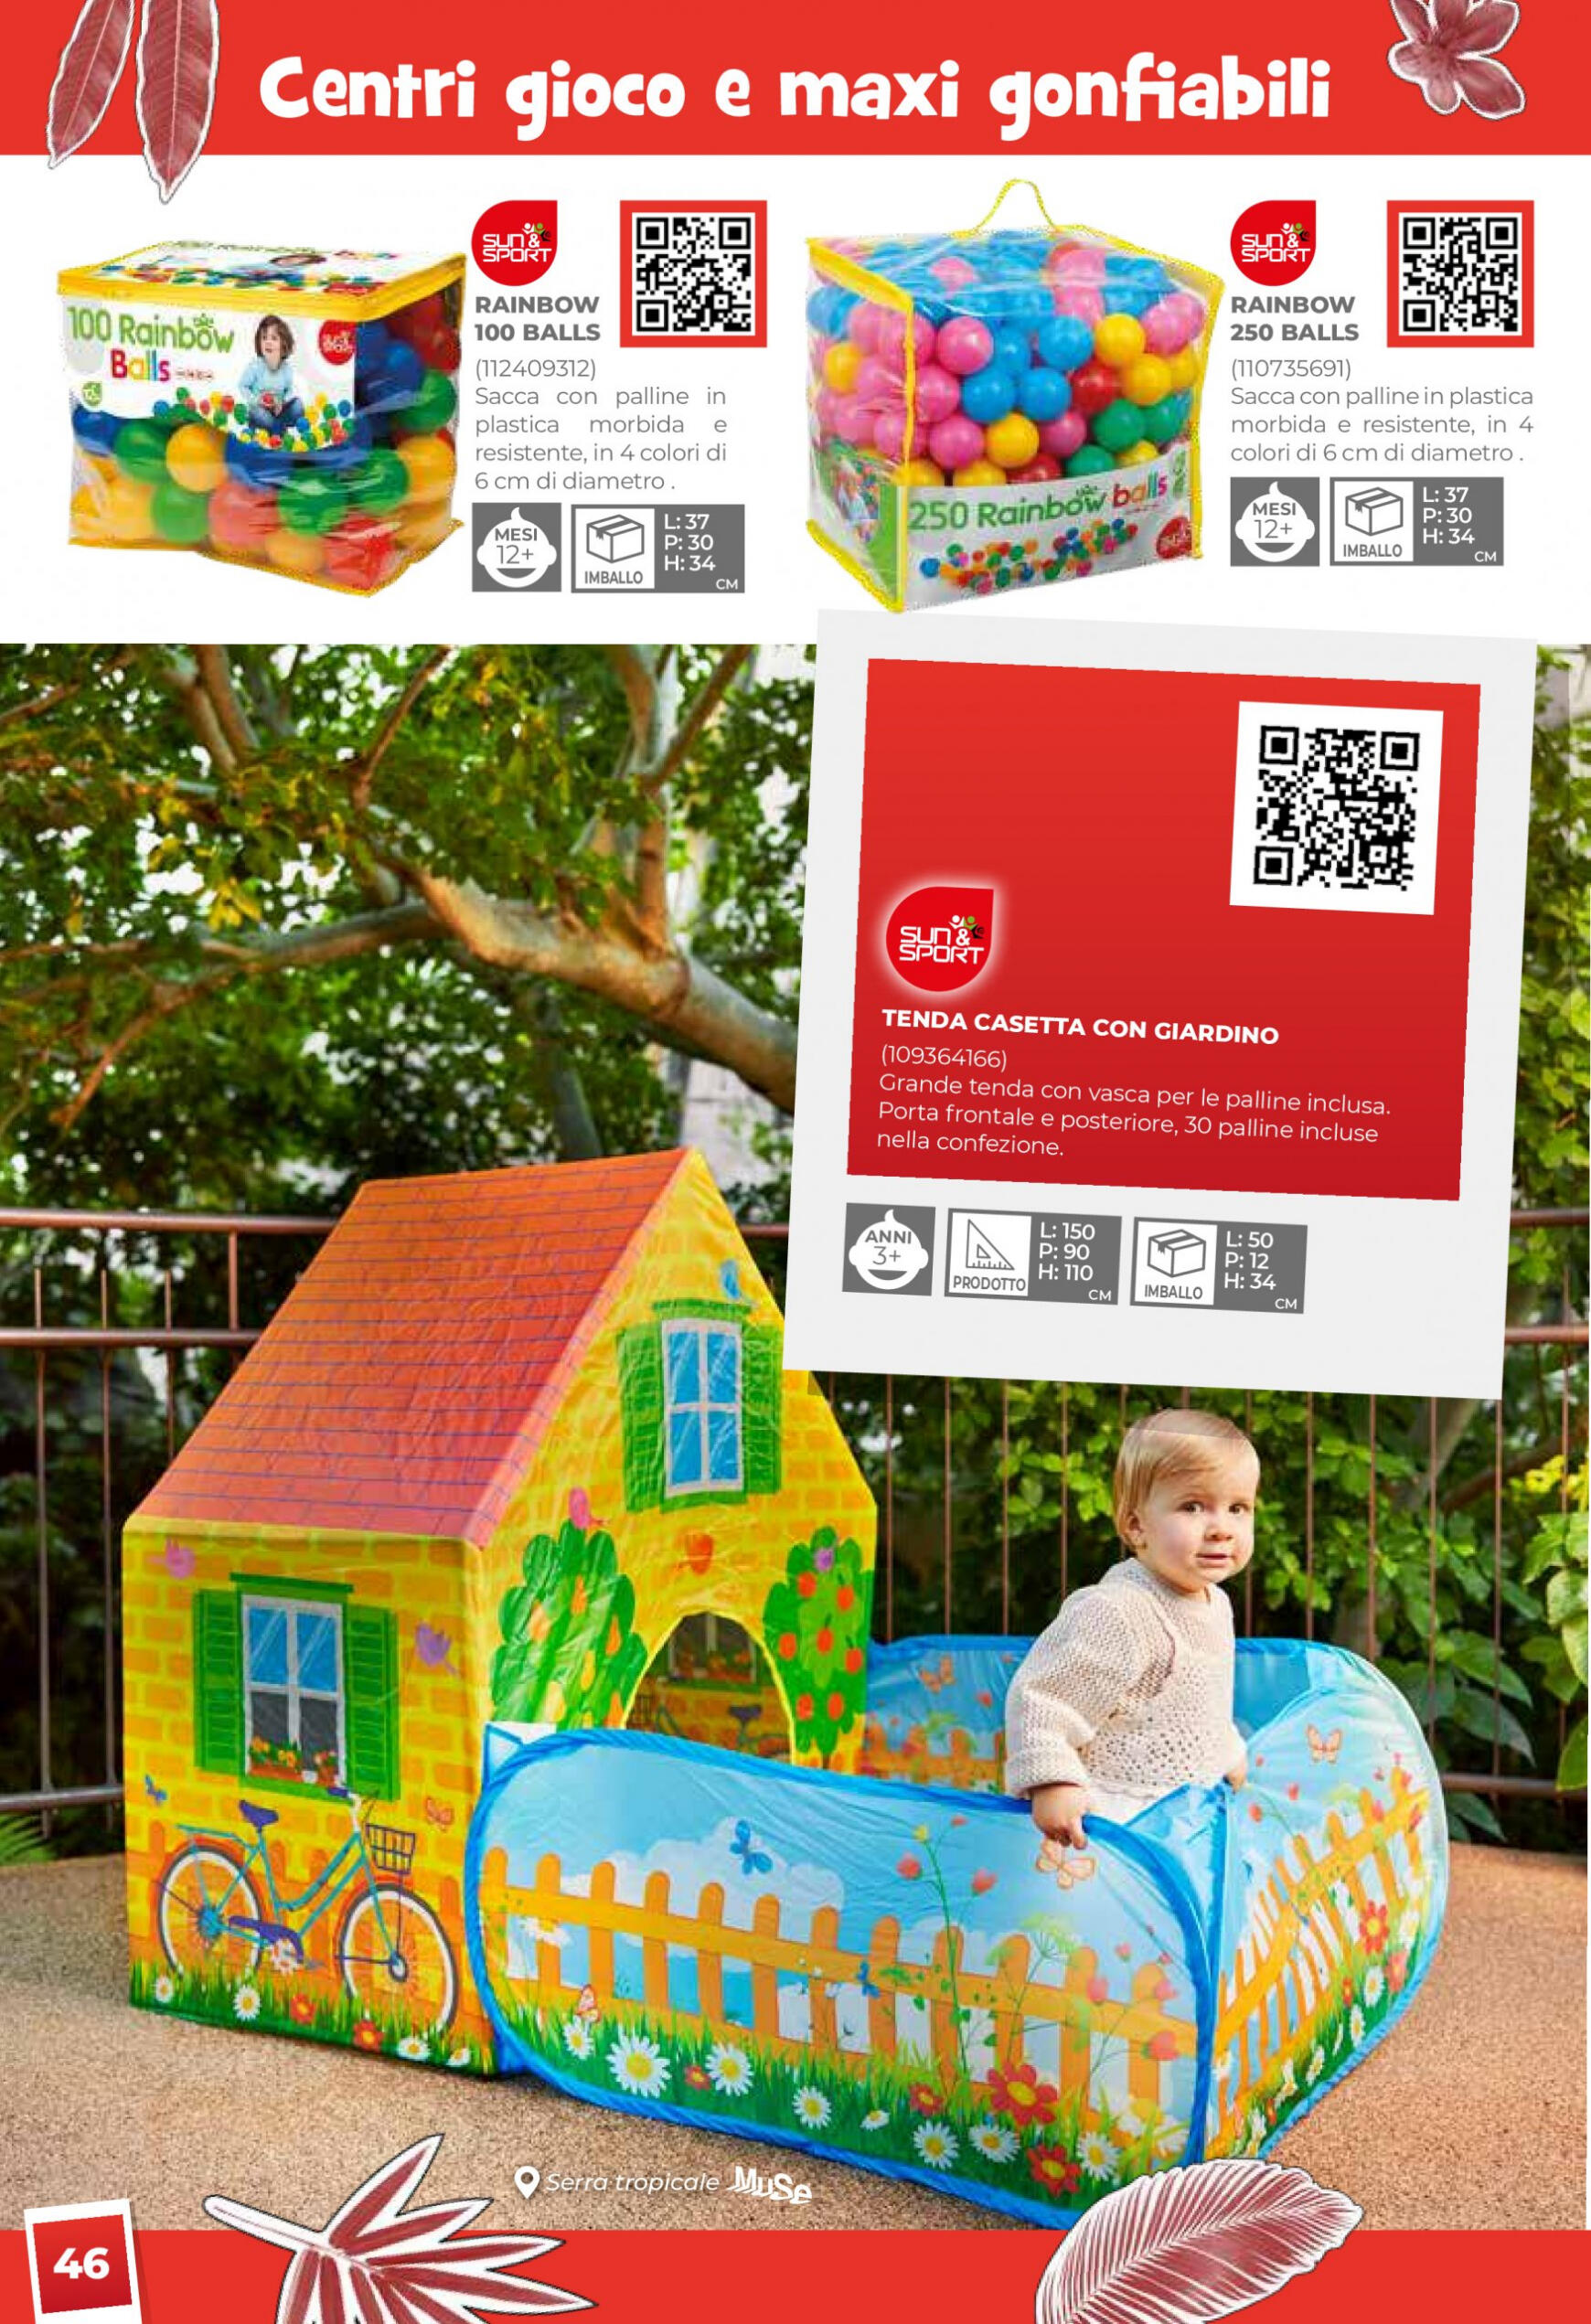 toys-center - Nuovo volantino Toys Center 01.05. - 31.12. - page: 48